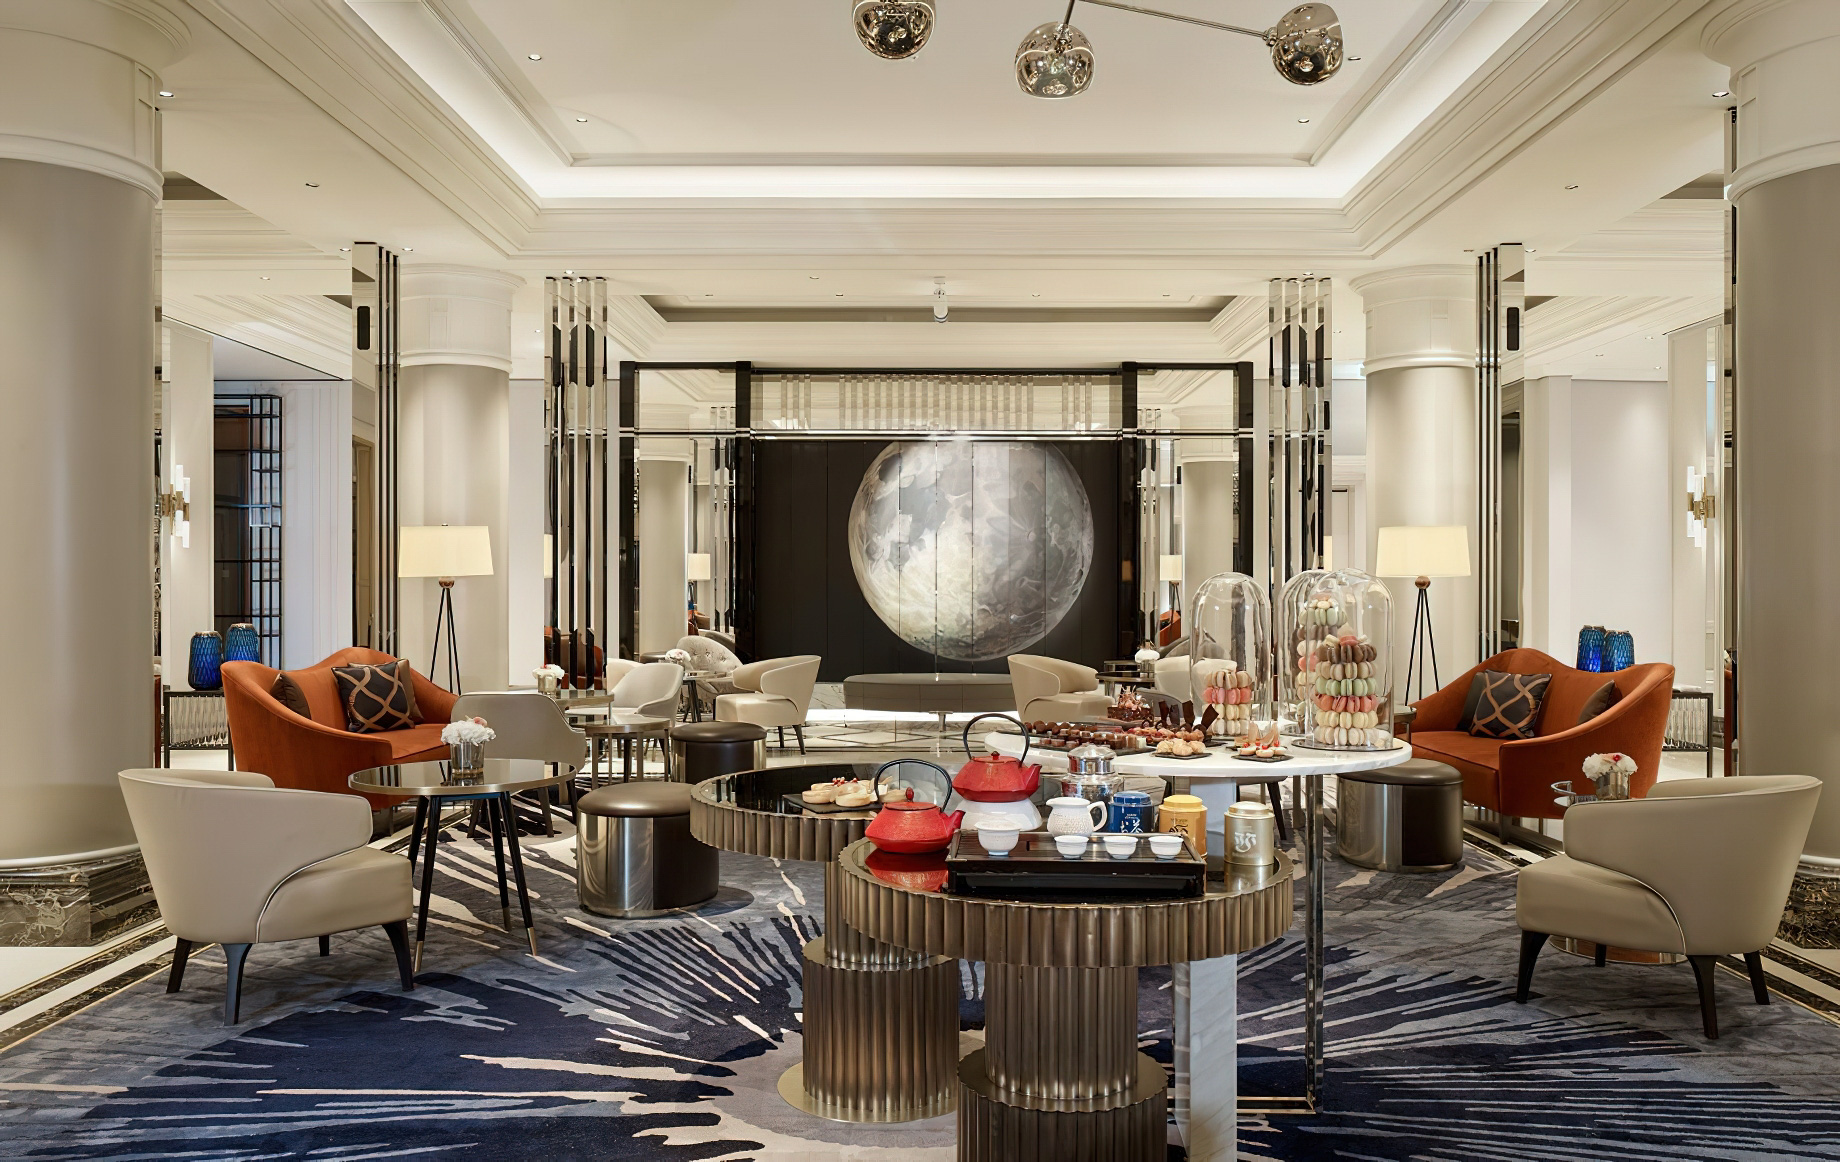 The Ritz-Carlton, Berlin Hotel – Berlin, Germany – The Lounge Interior Design